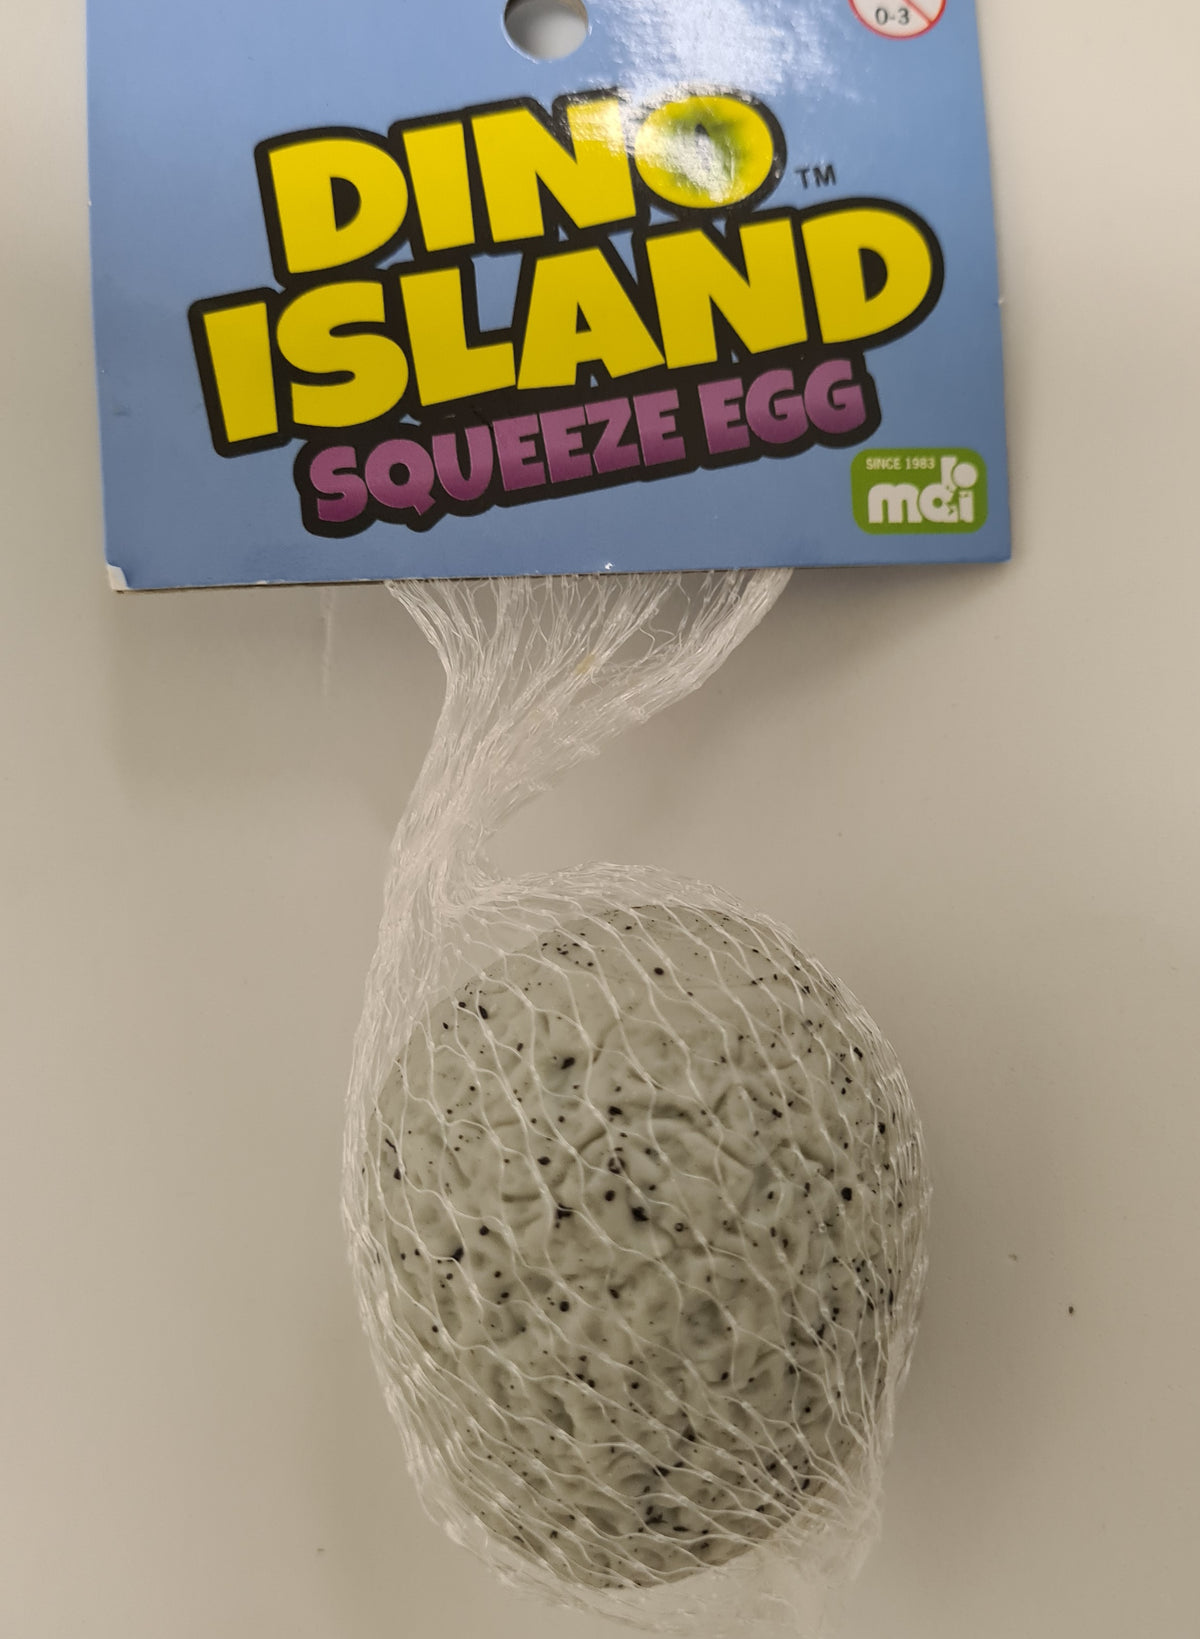 Dinosaur Squeeze Egg